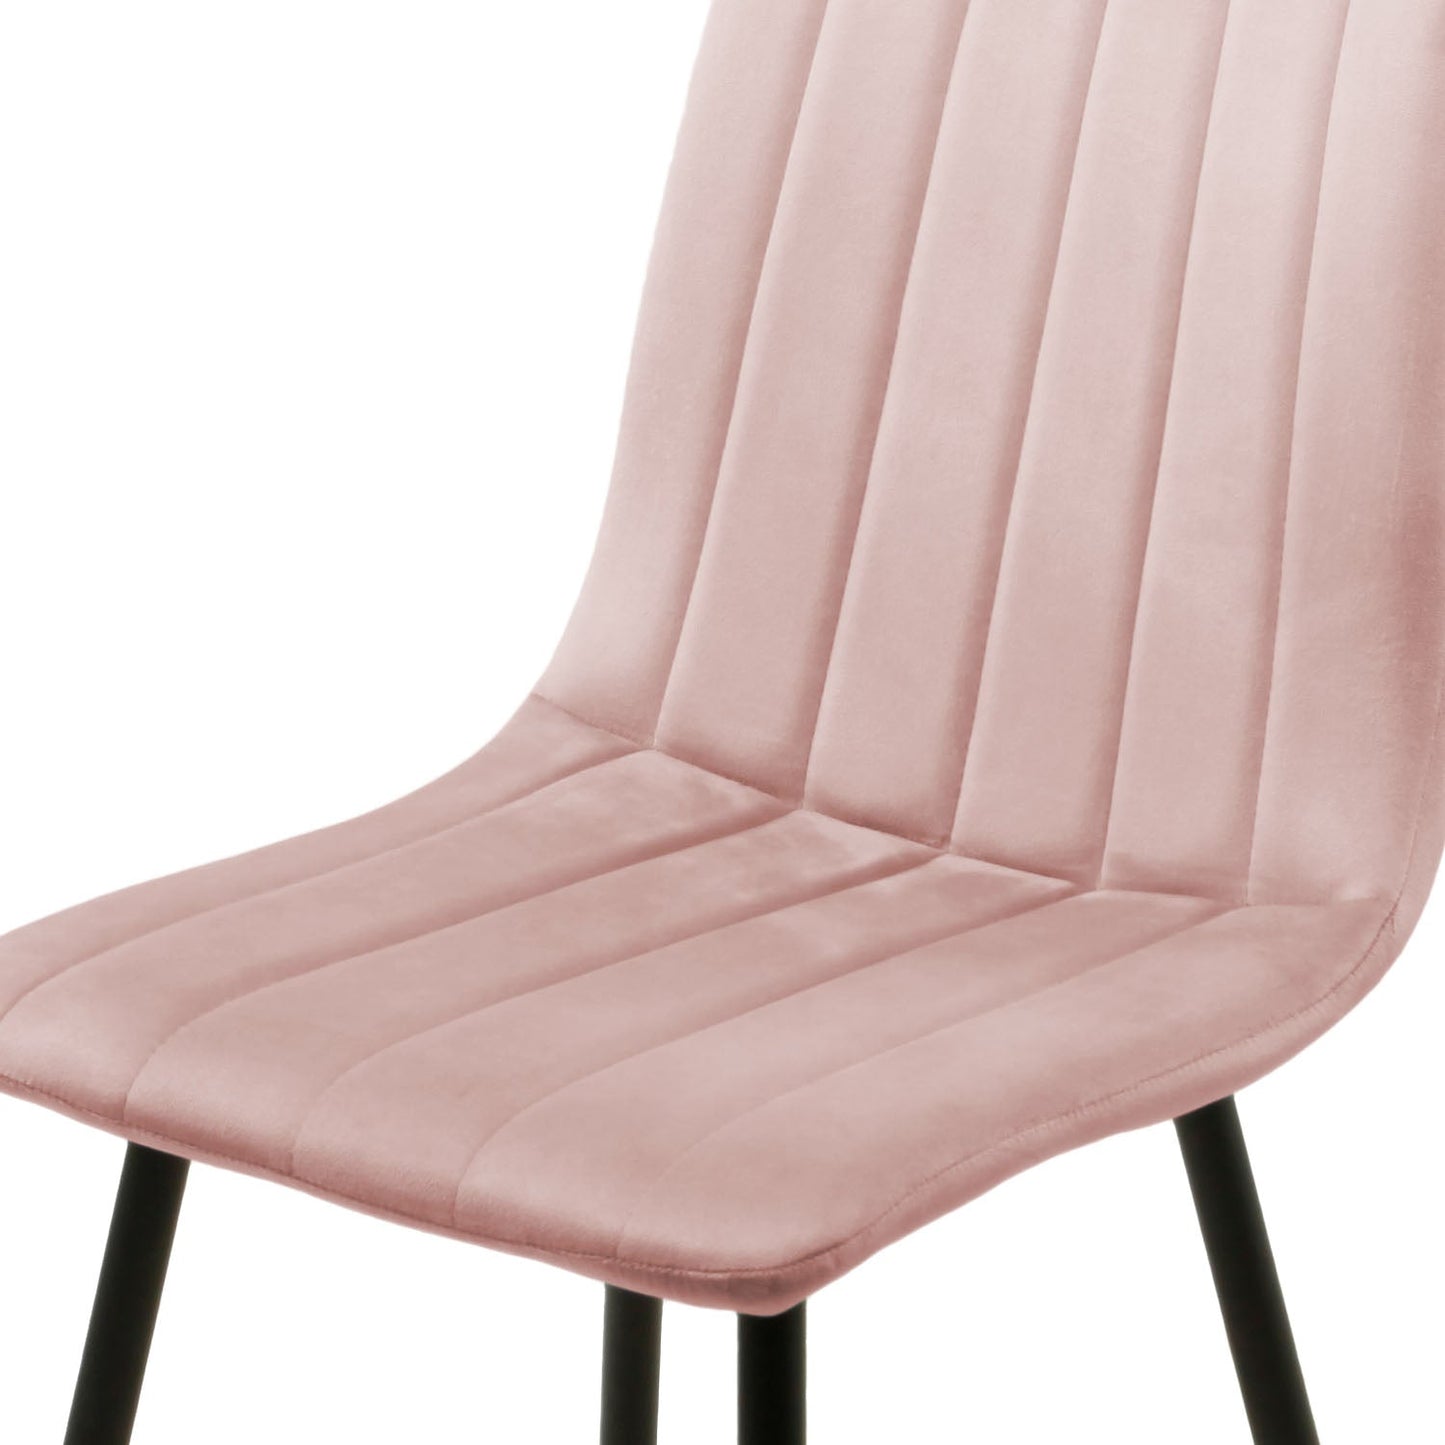 Homedock Conjunto de Jantar Mesa Extensível Molise 4 Cadeiras Sia - Natural c/ Rosa Móveis Província